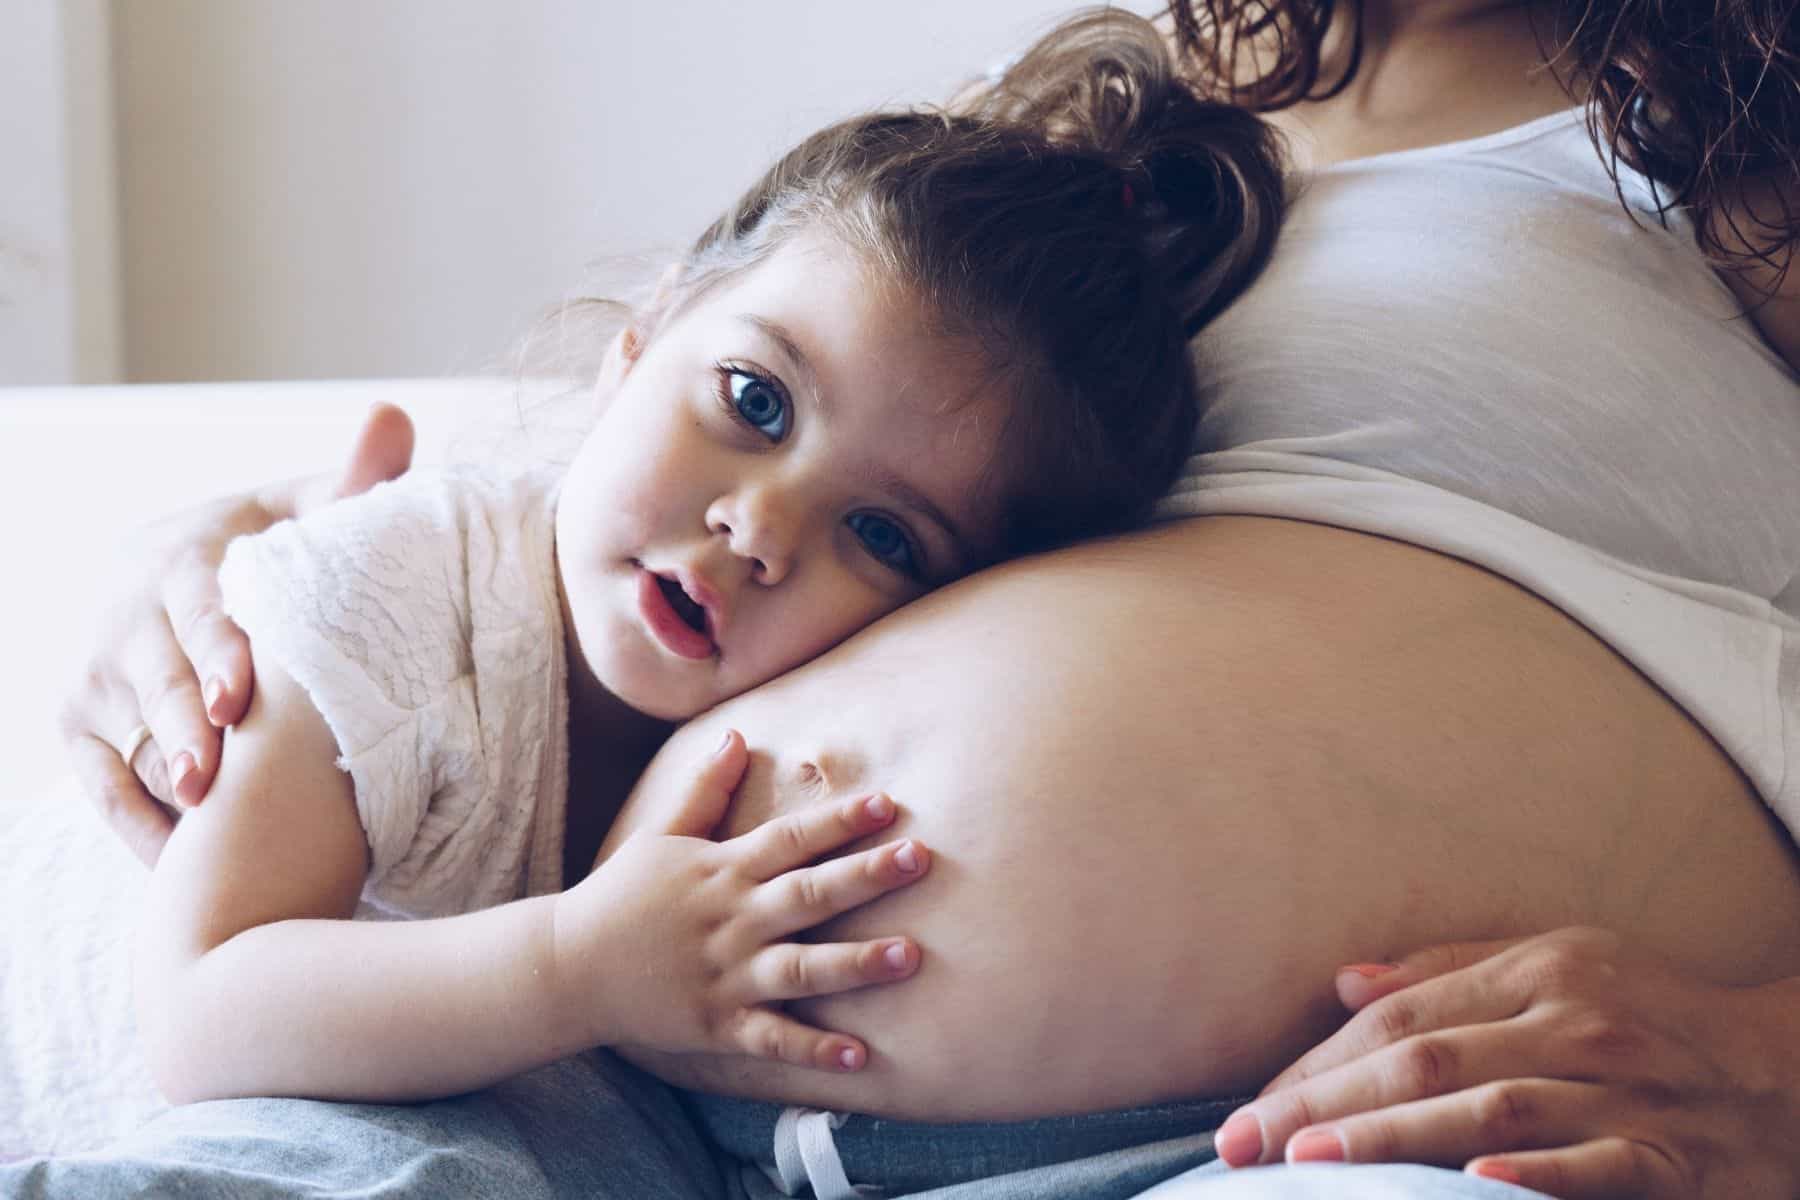 Pregnancy photoshoot idea - big sister